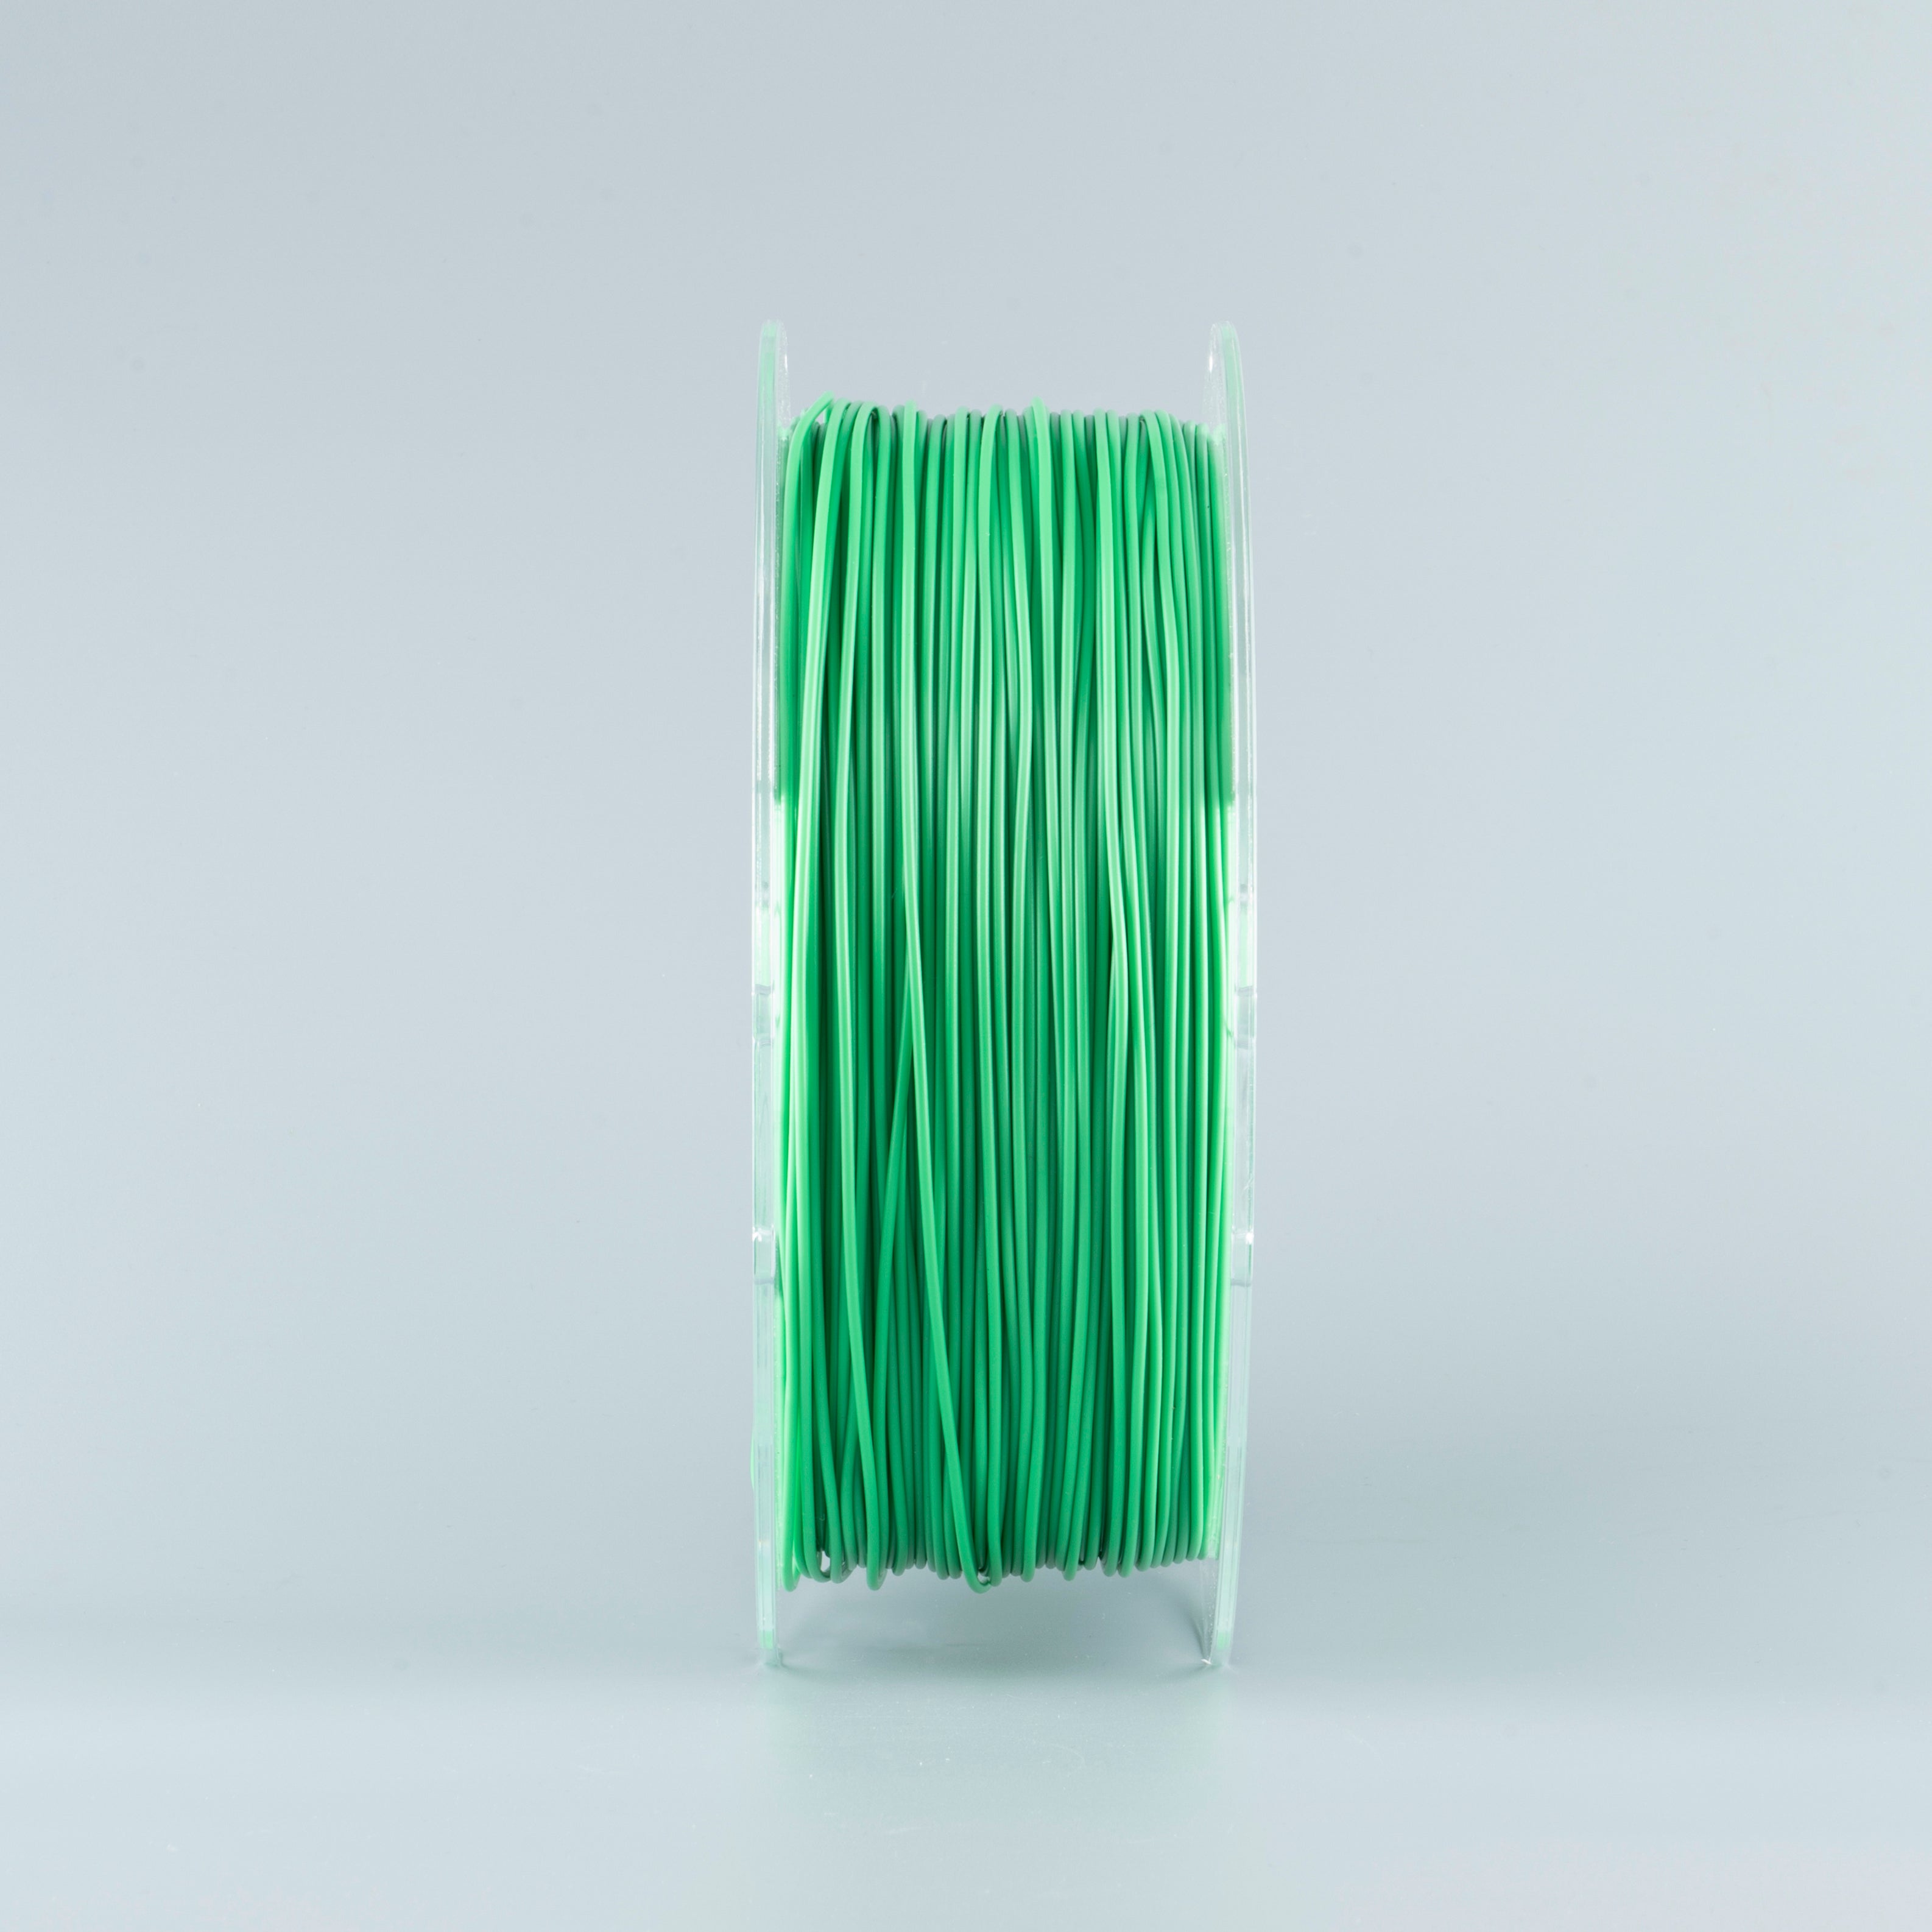 Mayrc Green PETG Filament 1kg For 3D Printer